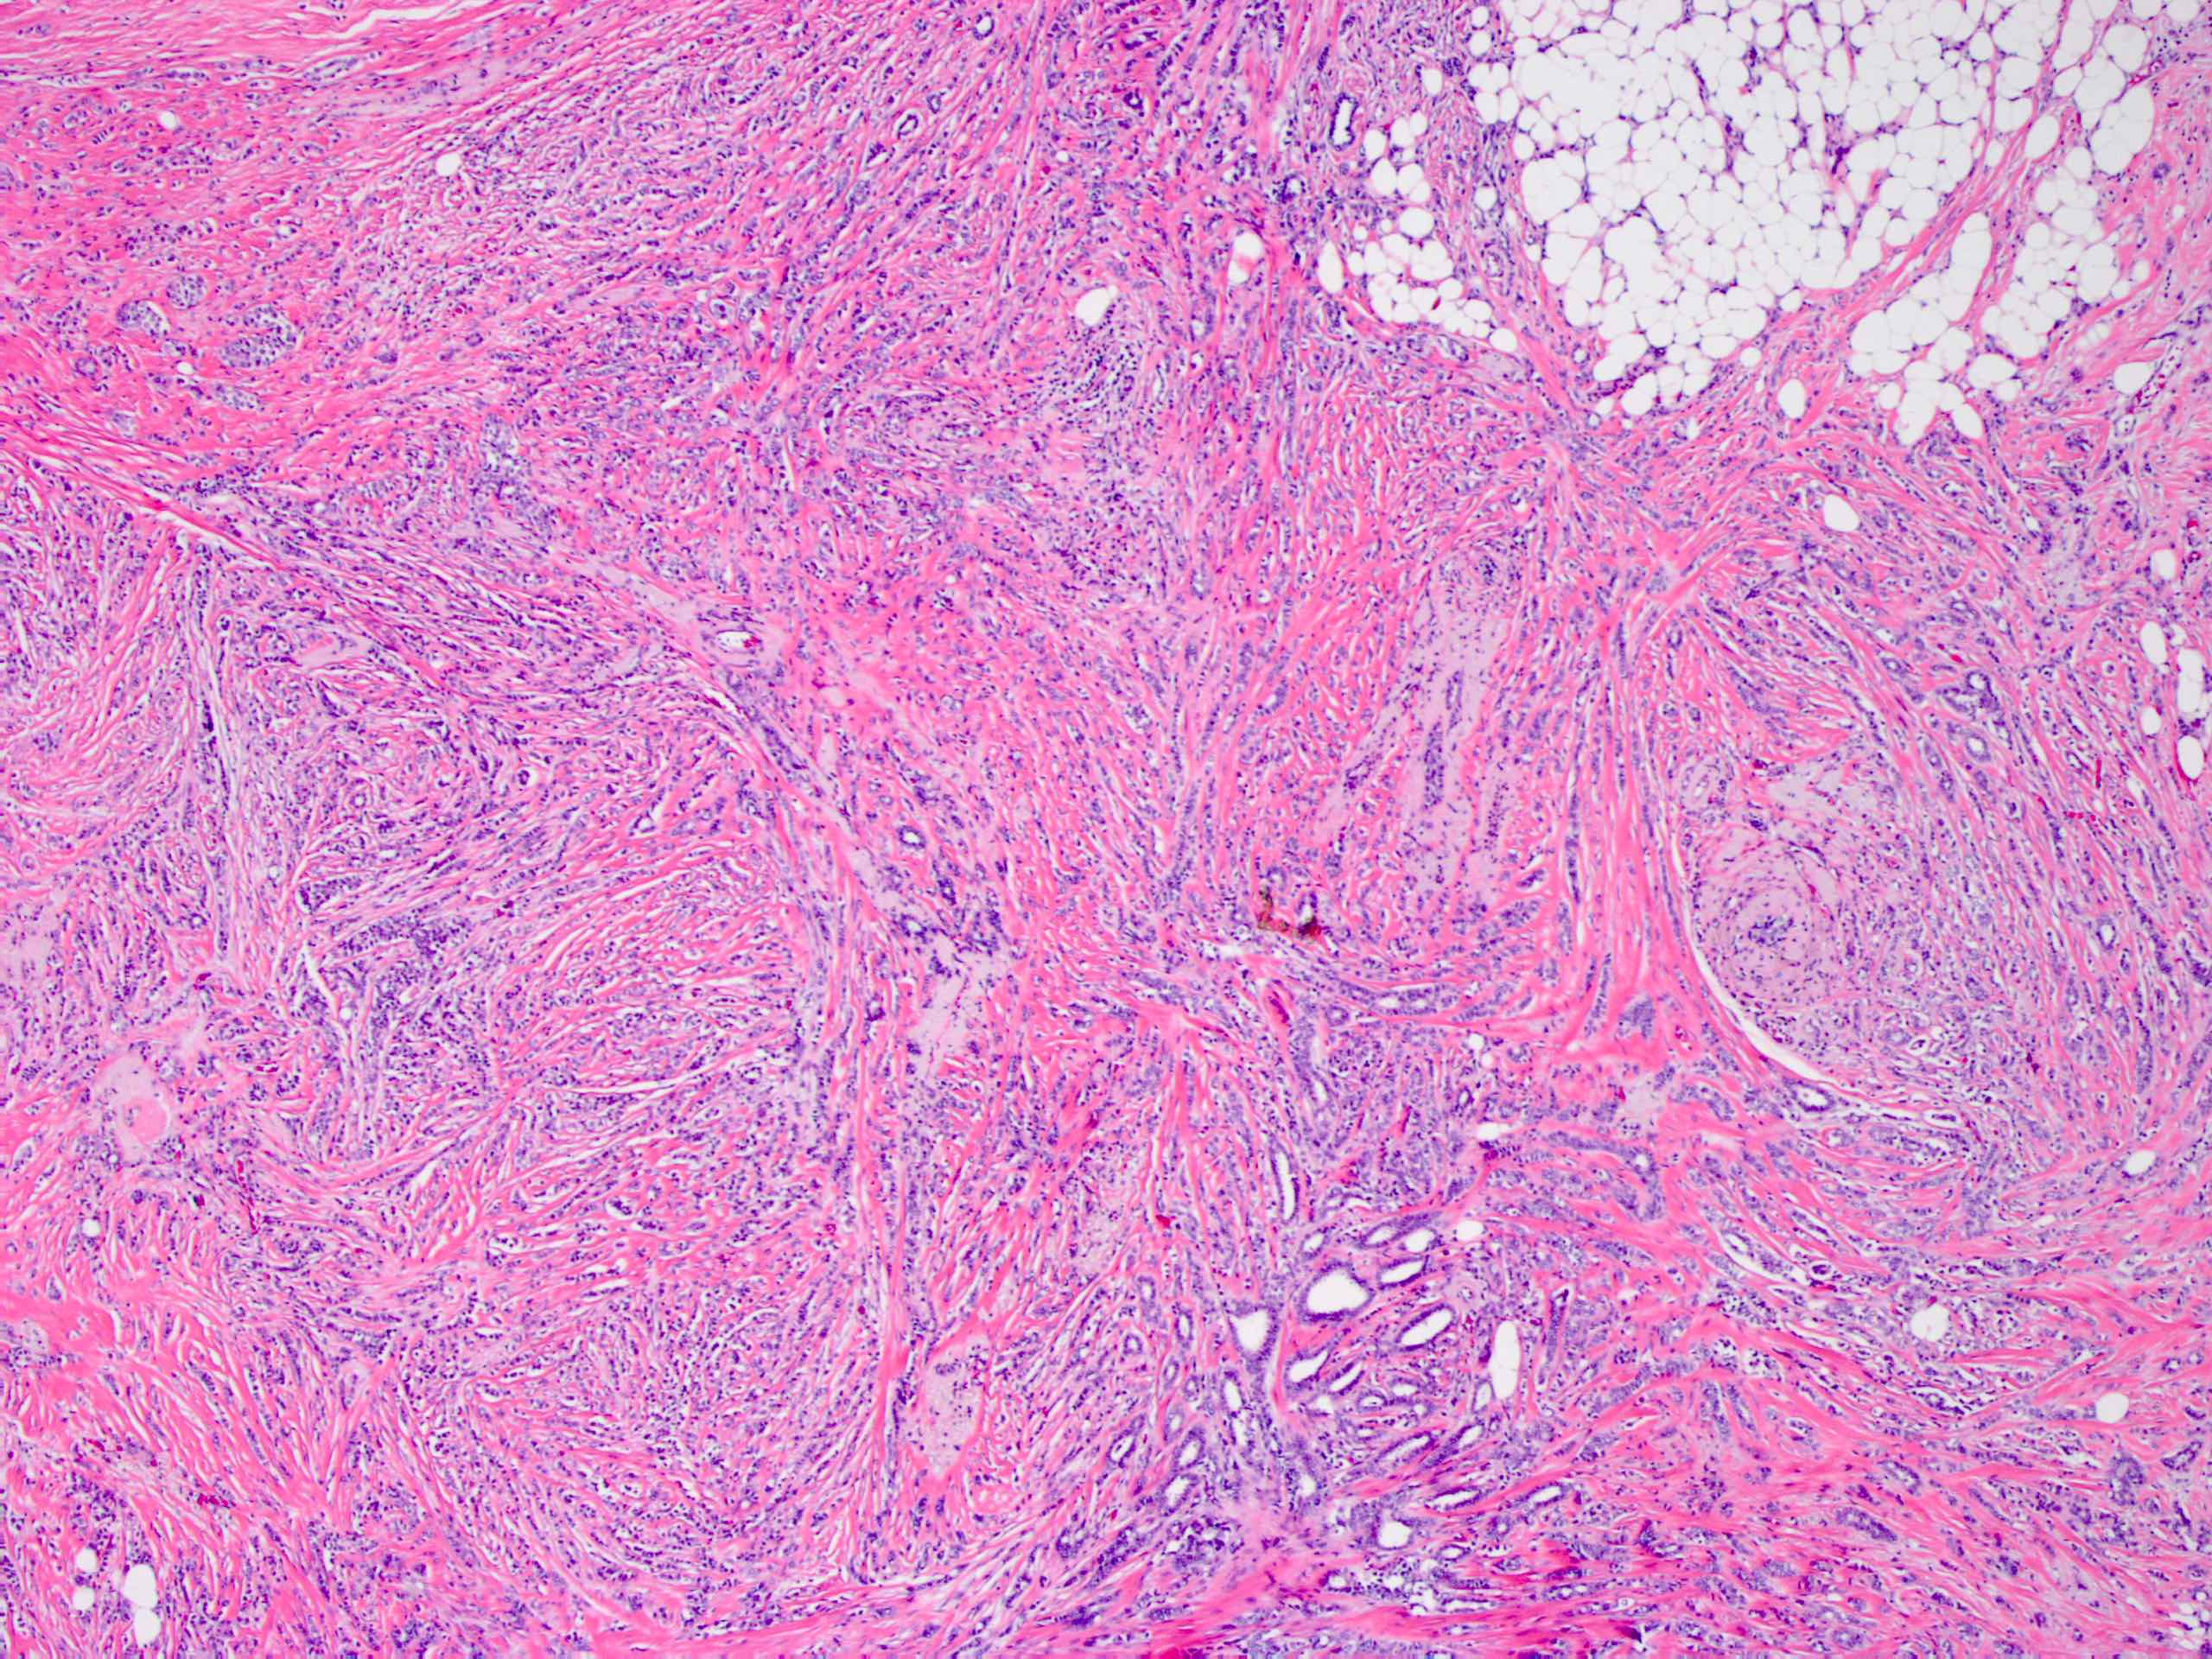 Invasive lobular carcinoma of the breast